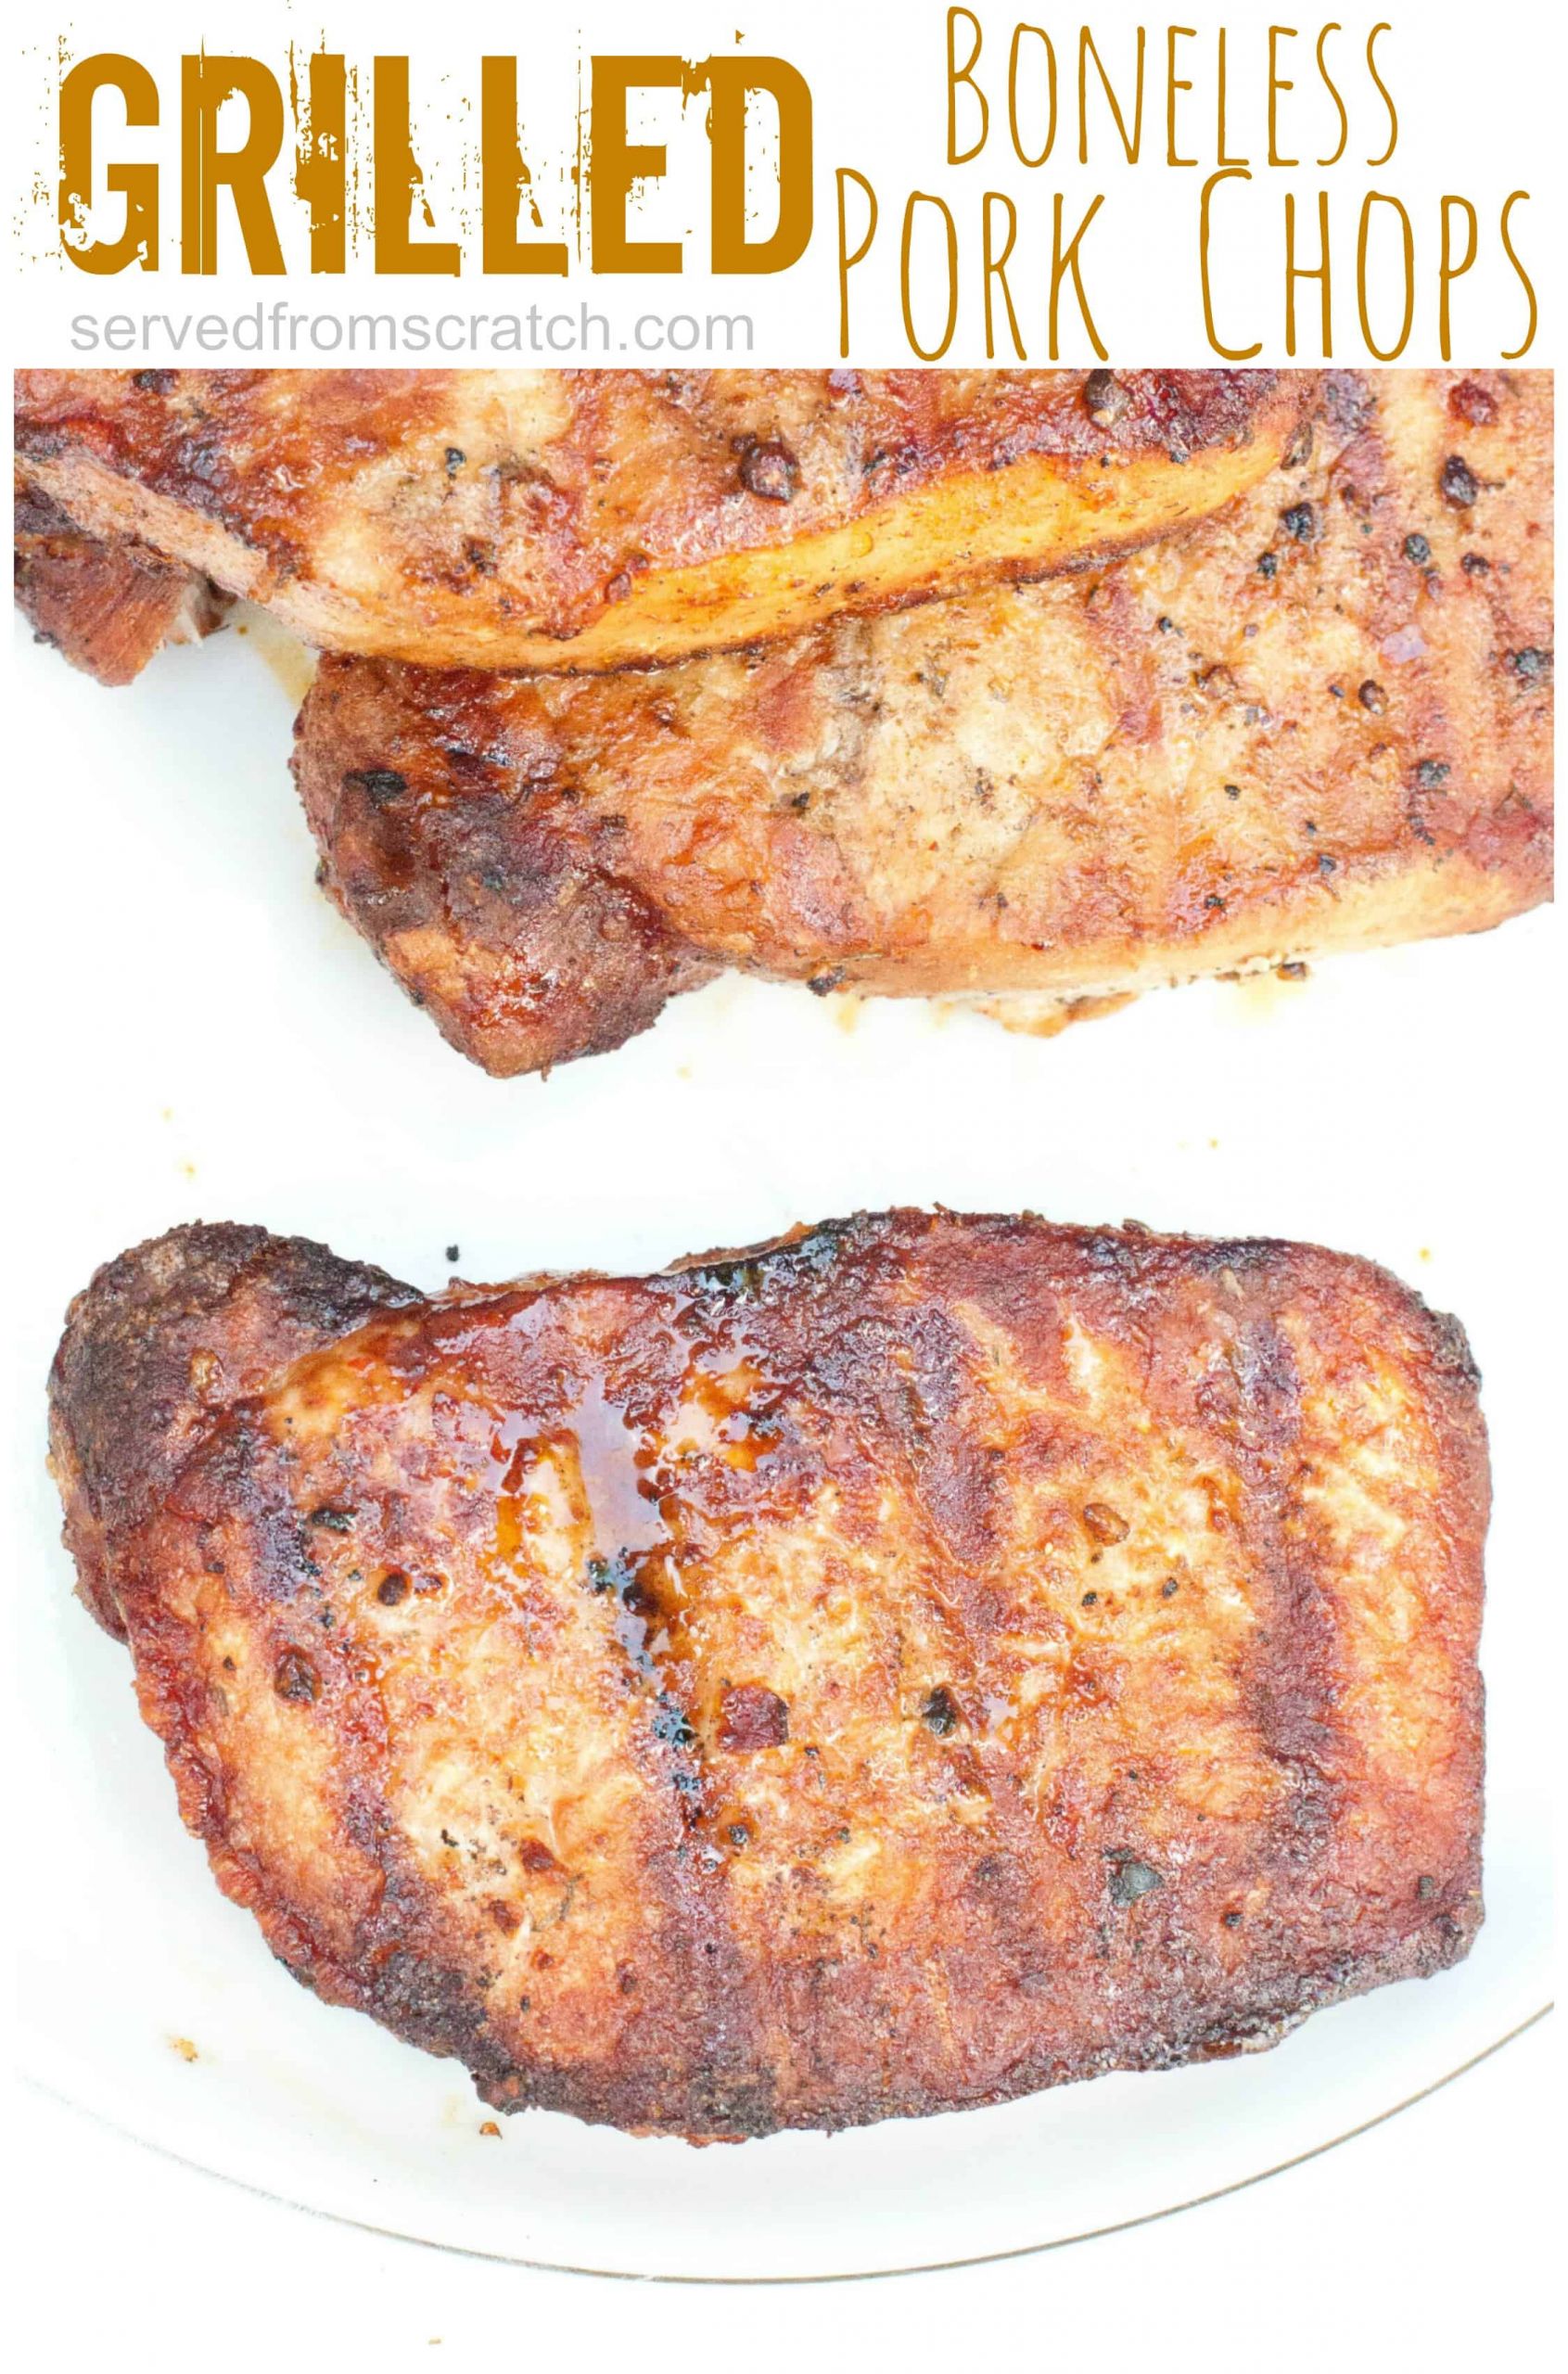 Grill Boneless Pork Chops
 Grilled Boneless Pork Chops Served From Scratch